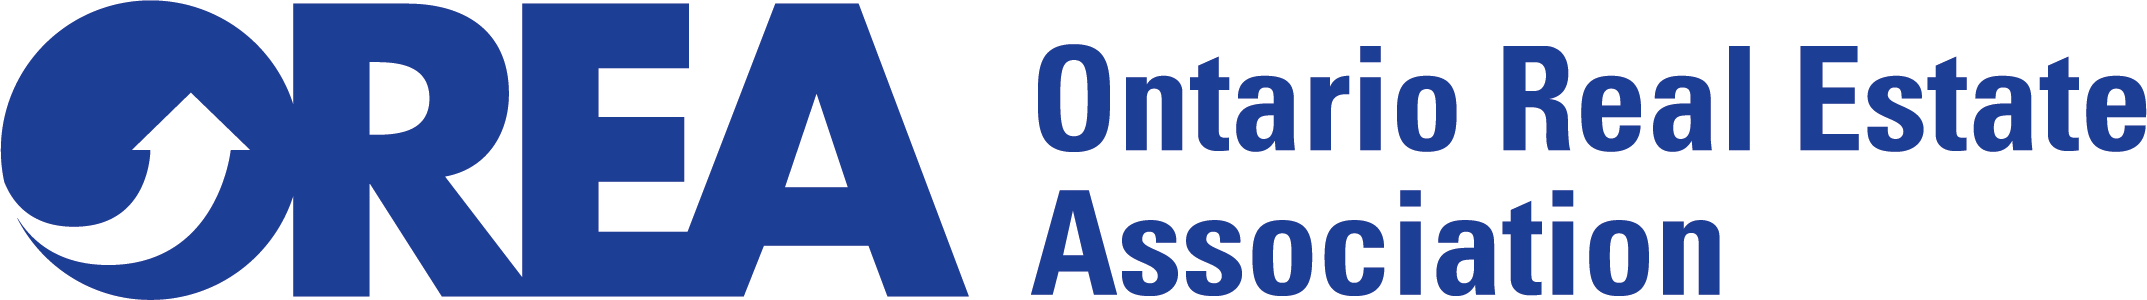 Ontario Real Estate Association 